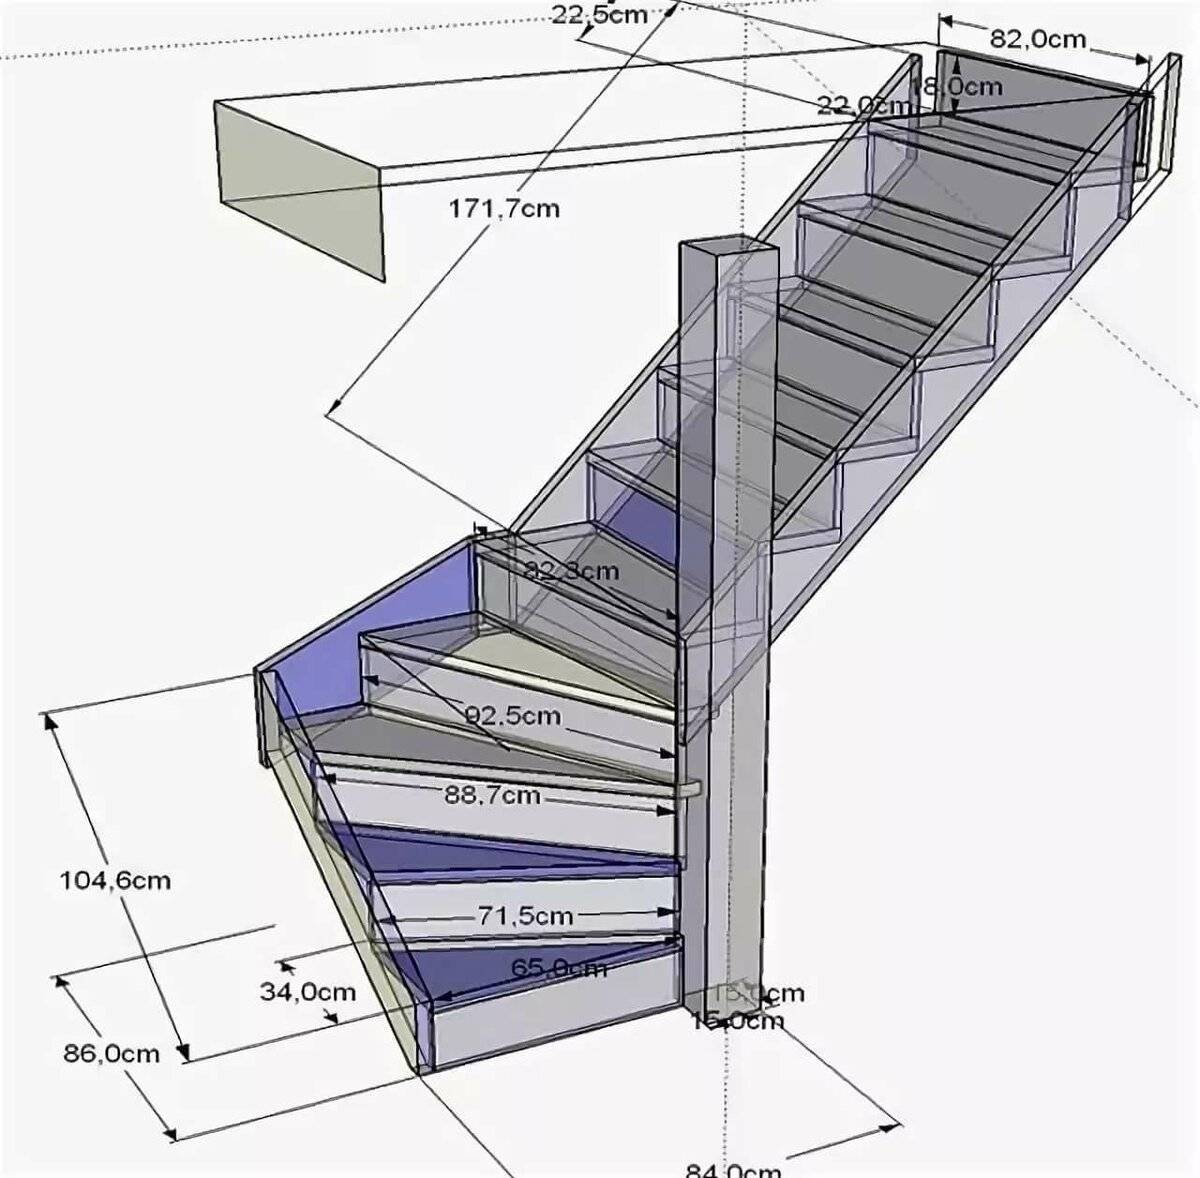 Лестница на мансарду своими руками - инструкция с чертежами